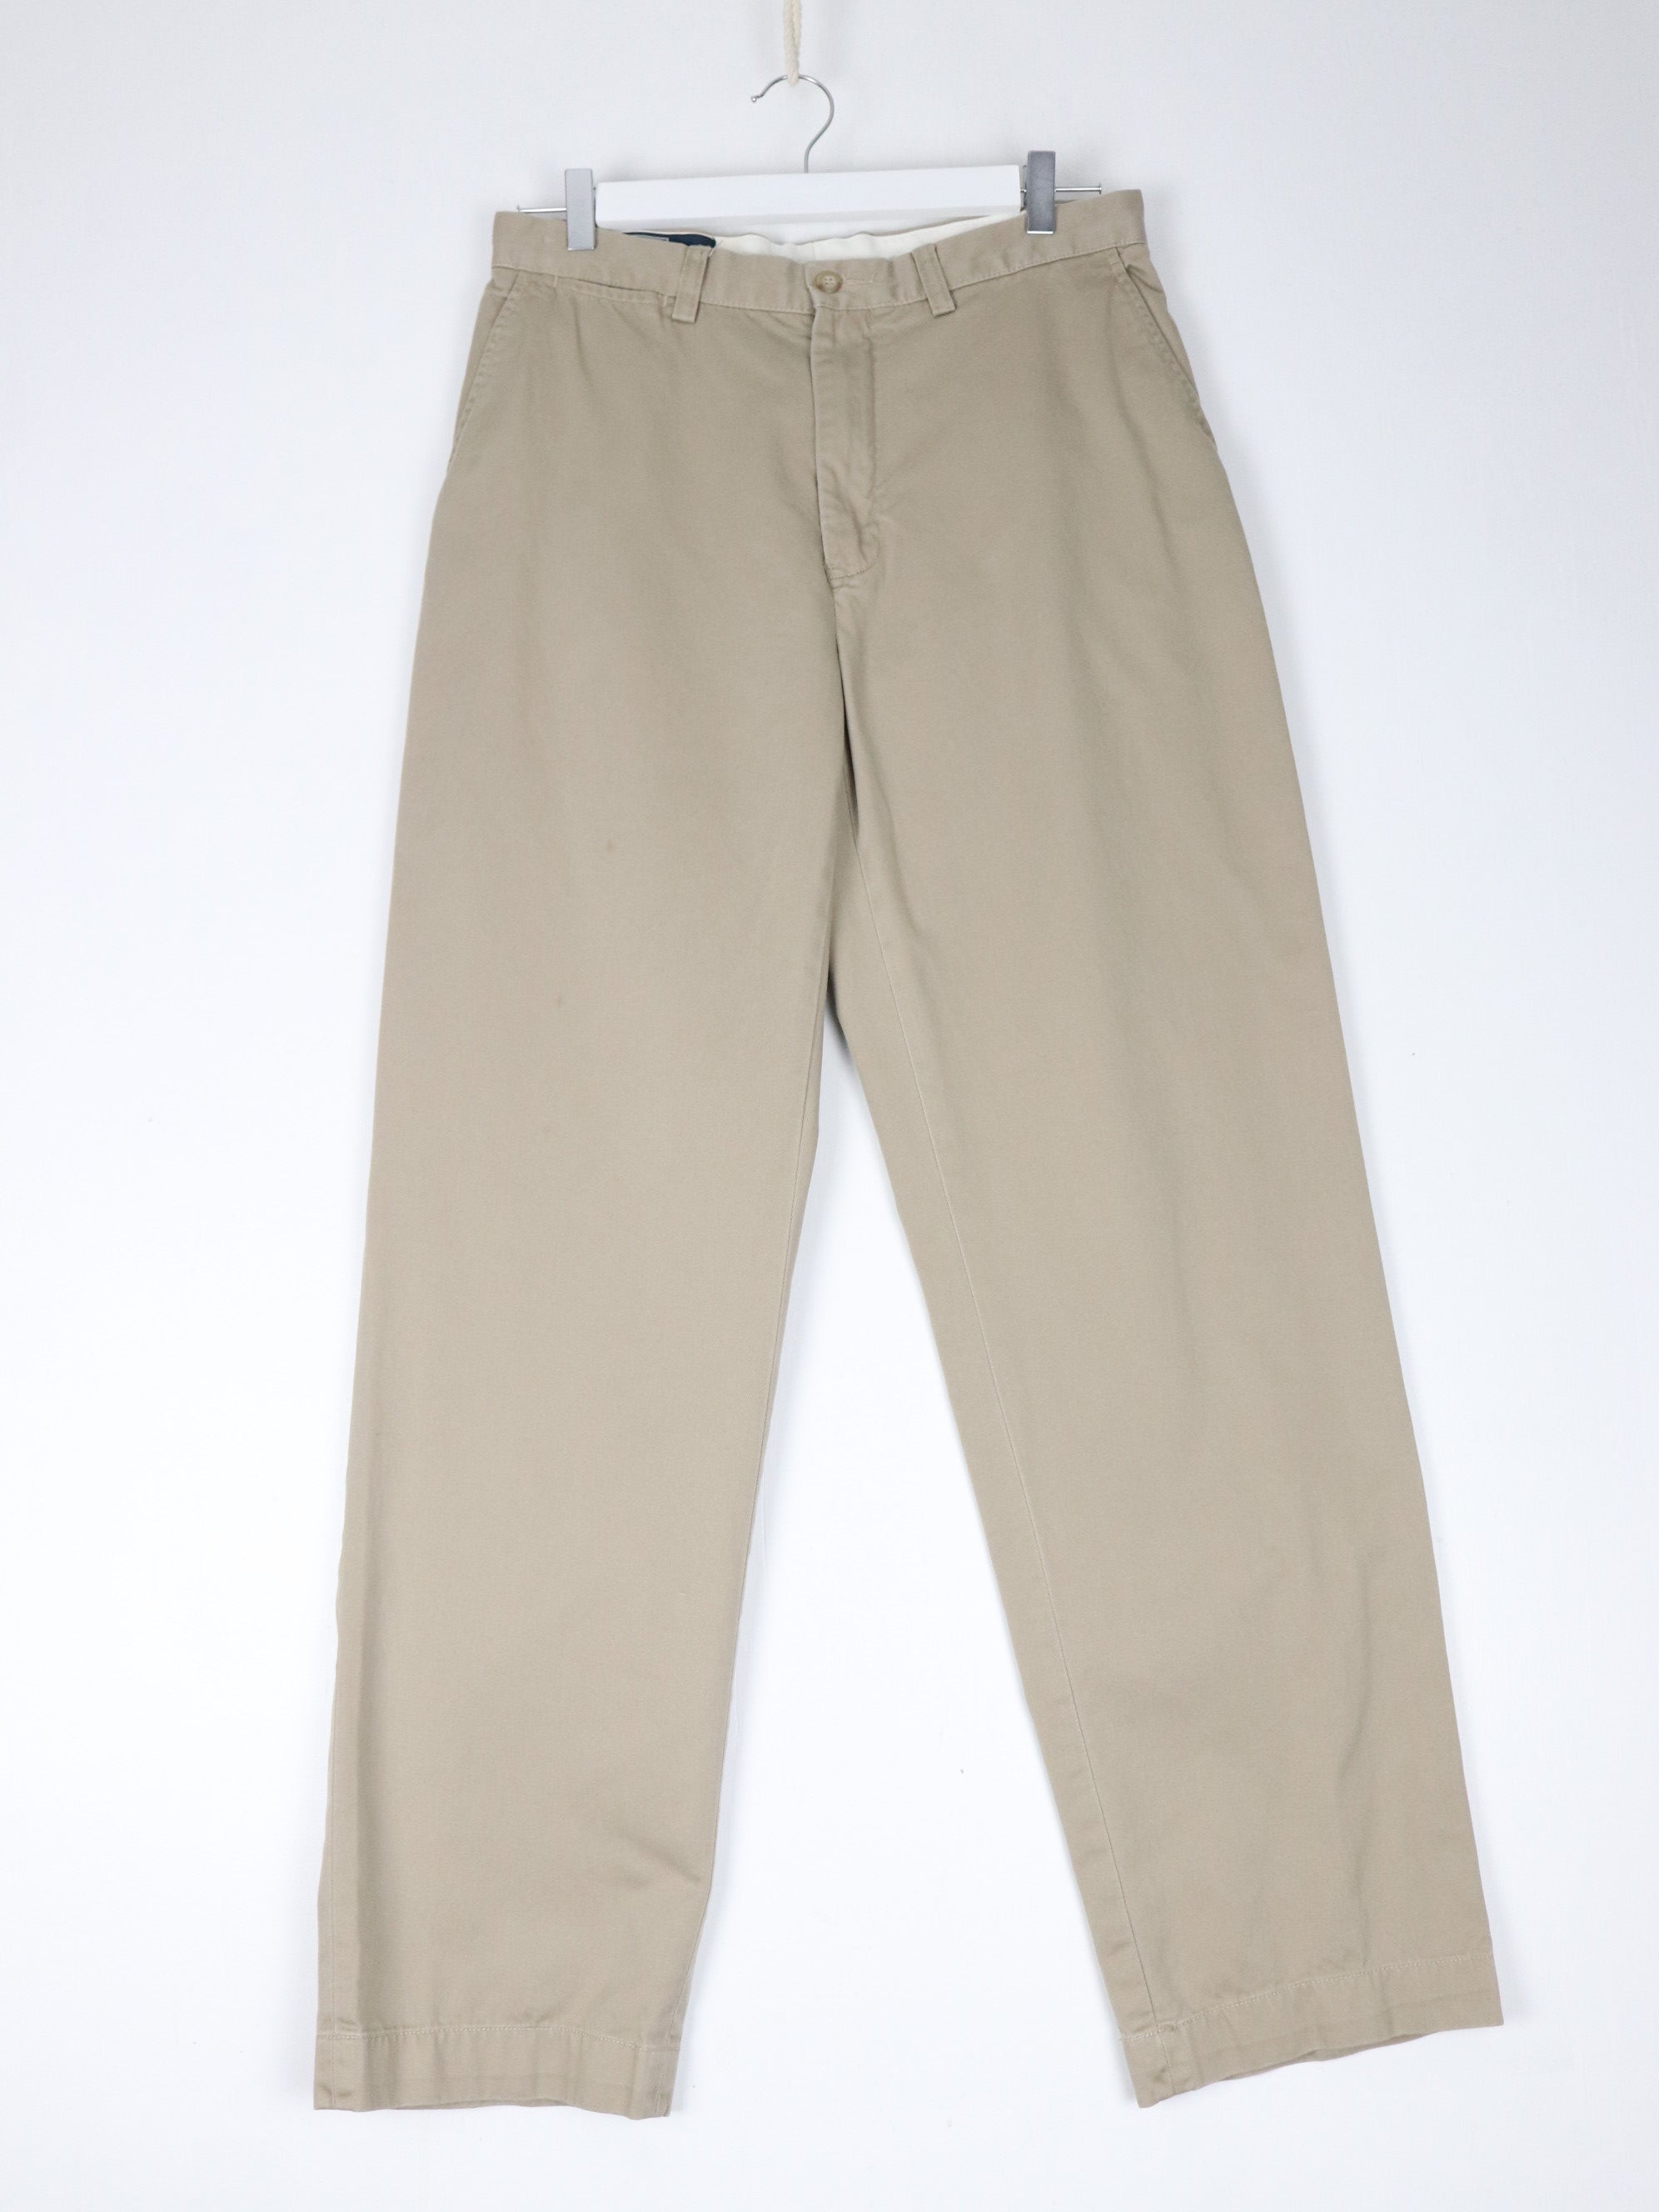 Vintage Lauren Ralph Lauren Khaki Tan Suede Leather Pants 8 10 Polo -   New Zealand